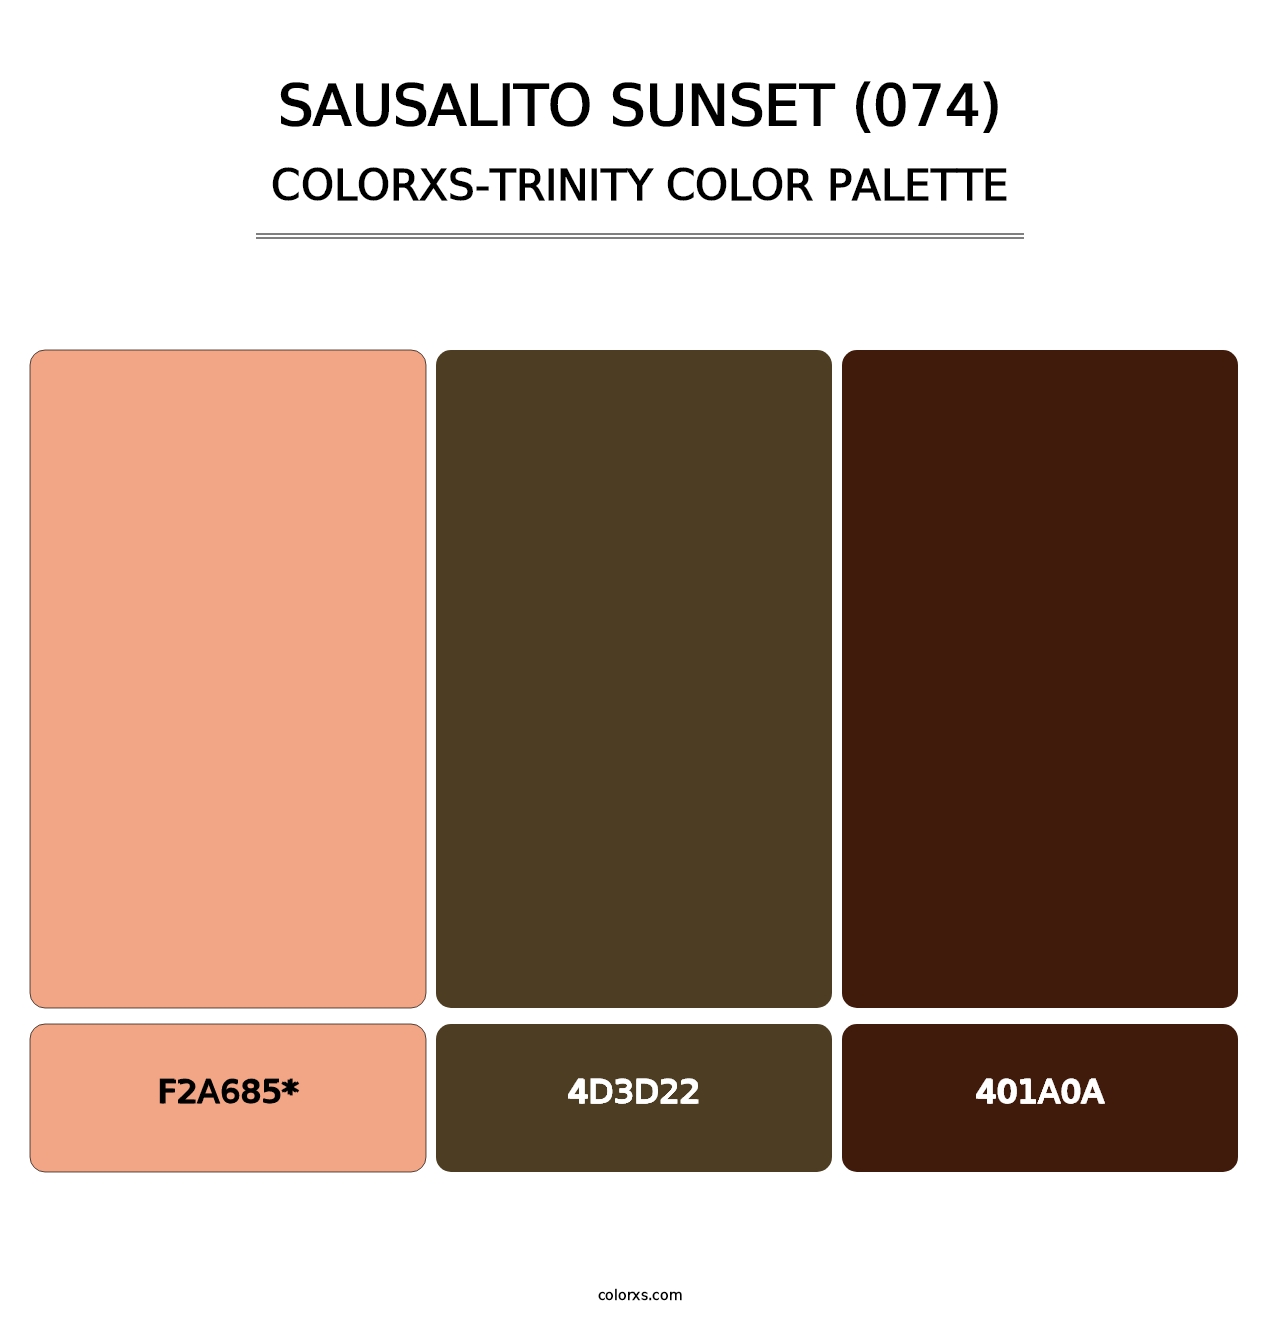 Sausalito Sunset (074) - Colorxs Trinity Palette